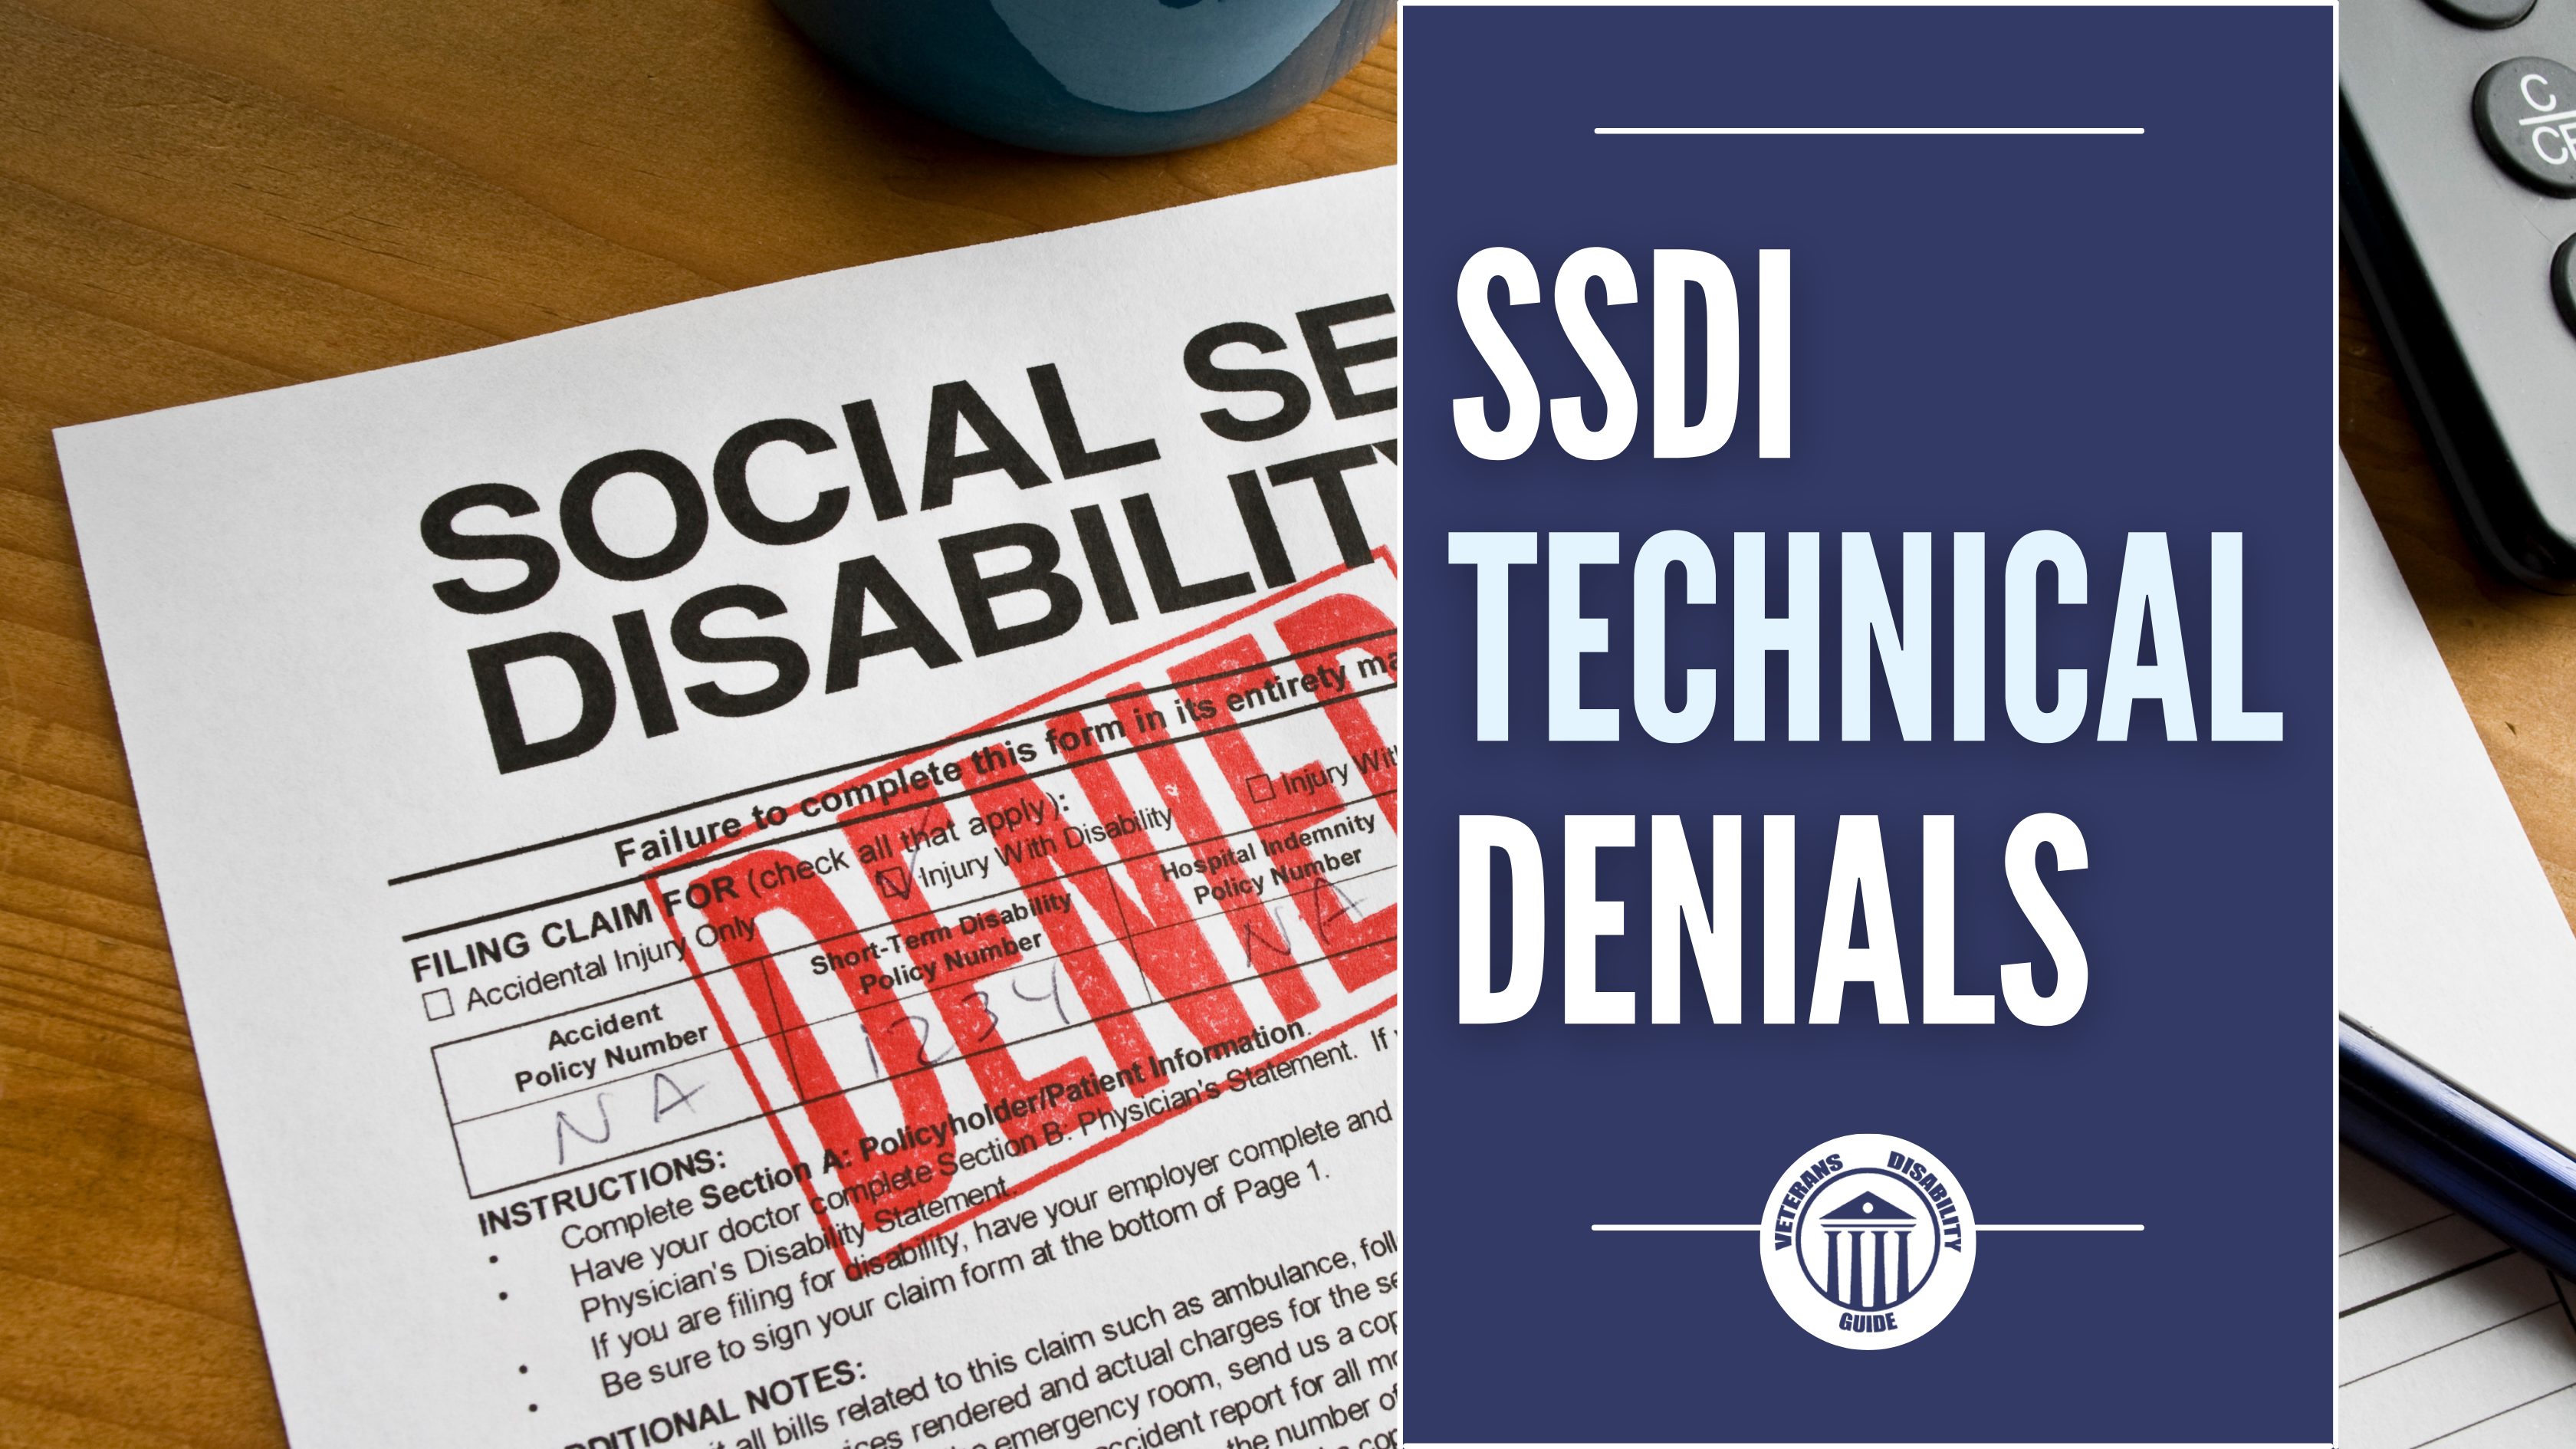 SSDI Technical Denials Blog header image